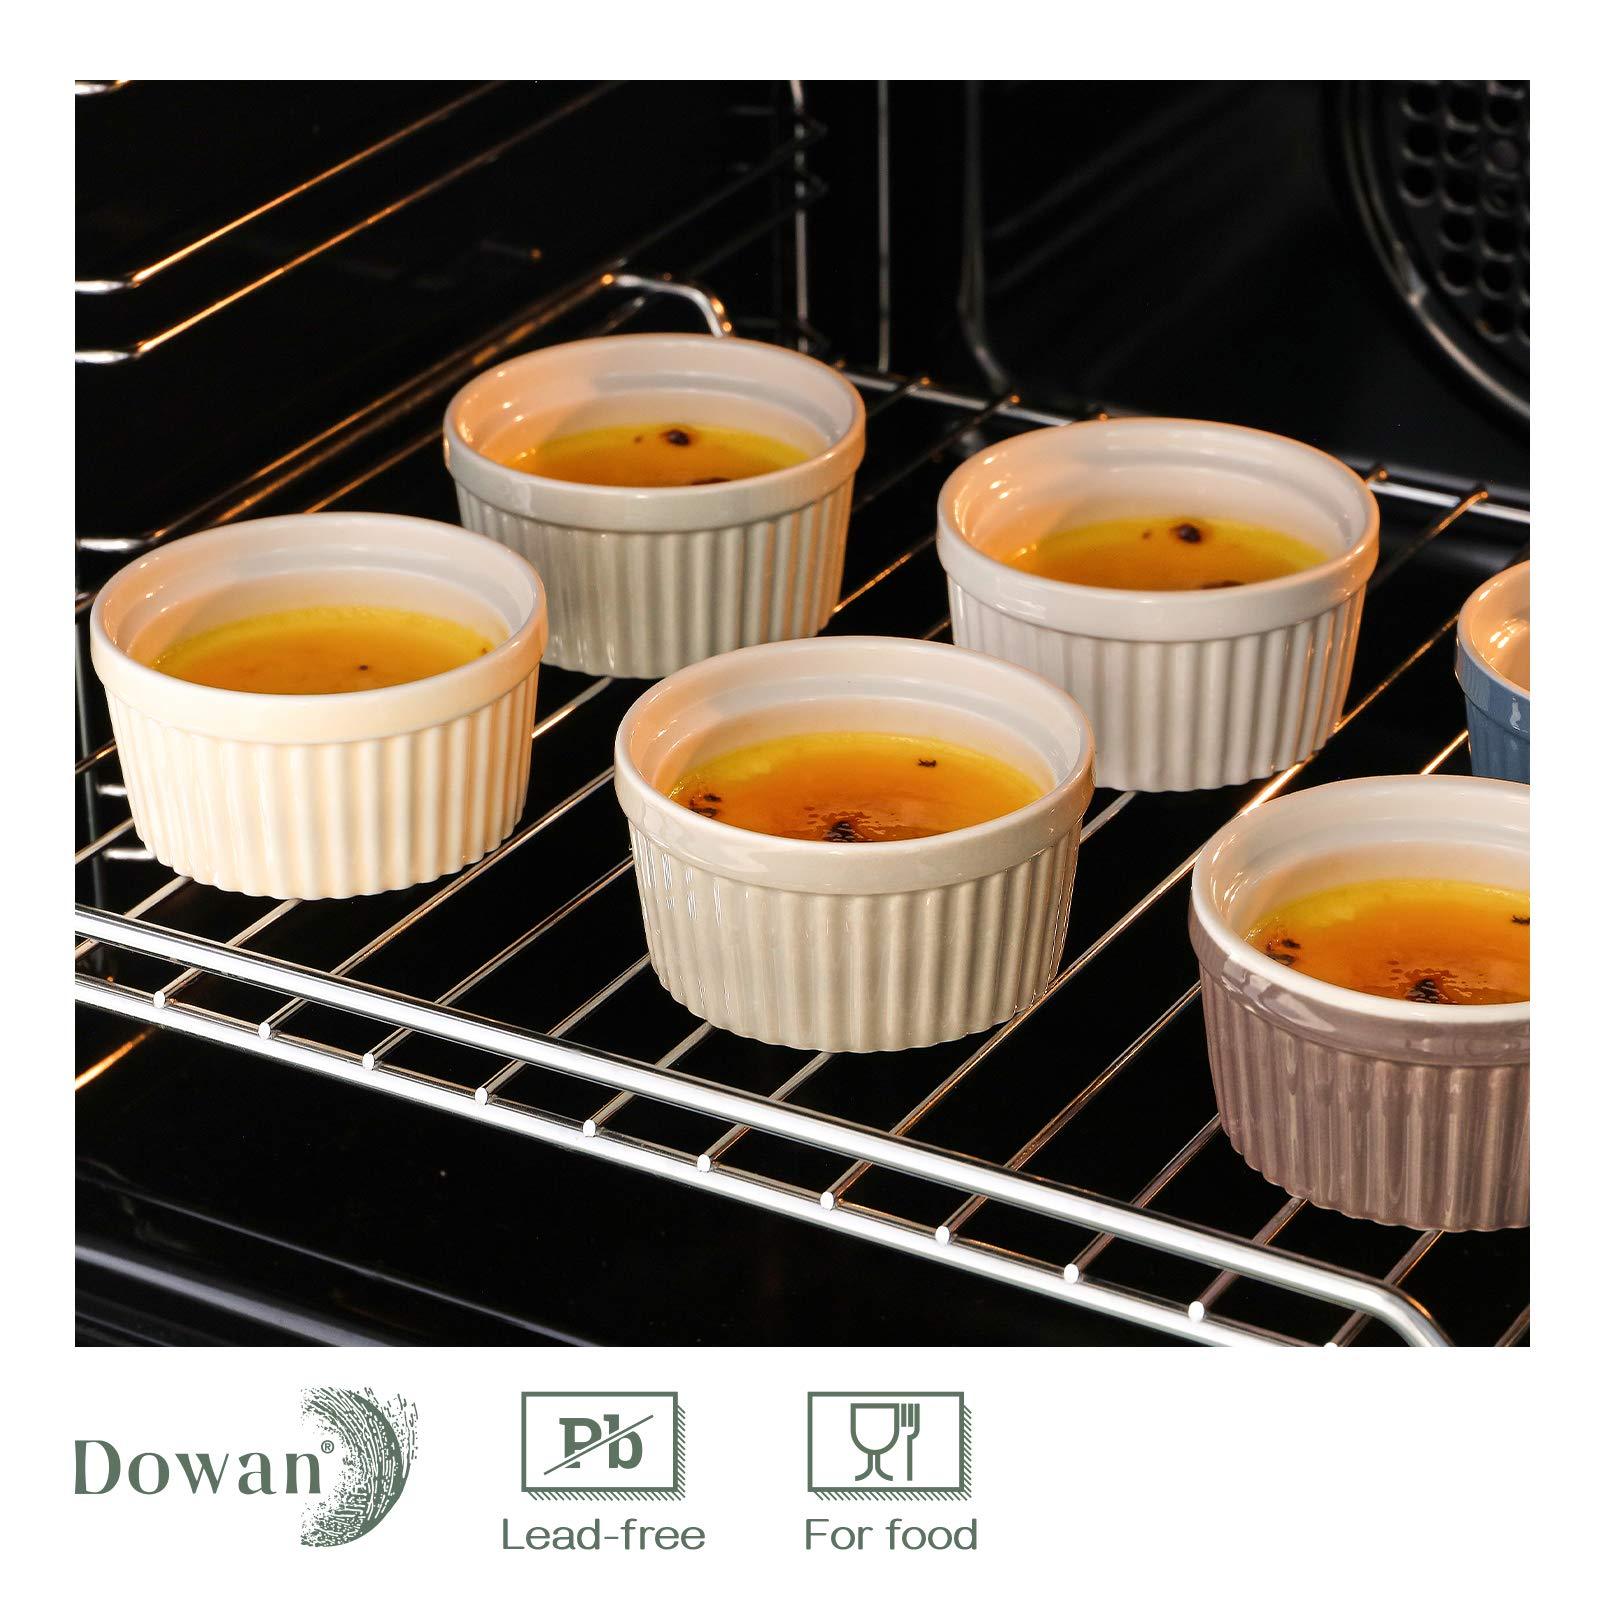 DOWAN Ramekins 4 oz Oven Safe - Creme Brulee Ramekins for Baking, Porcelain Ramekins Oven Safe, Classic Style Souffle Ramekins Bowls, Set of 6, Multi Brown - CookCave